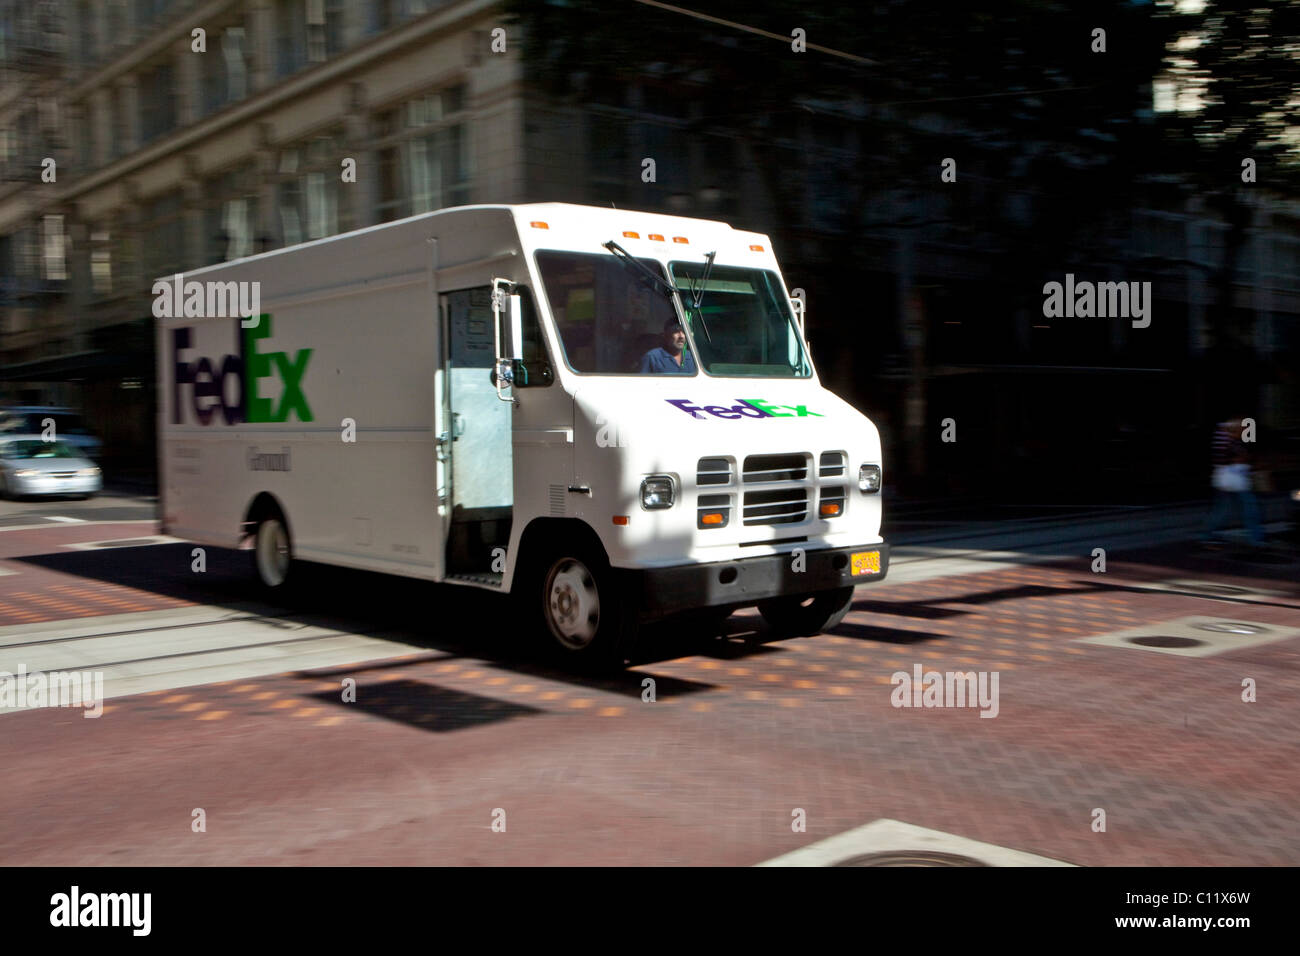 American vehicle by FedEX, Portland, Oregon, USA Stock Photo